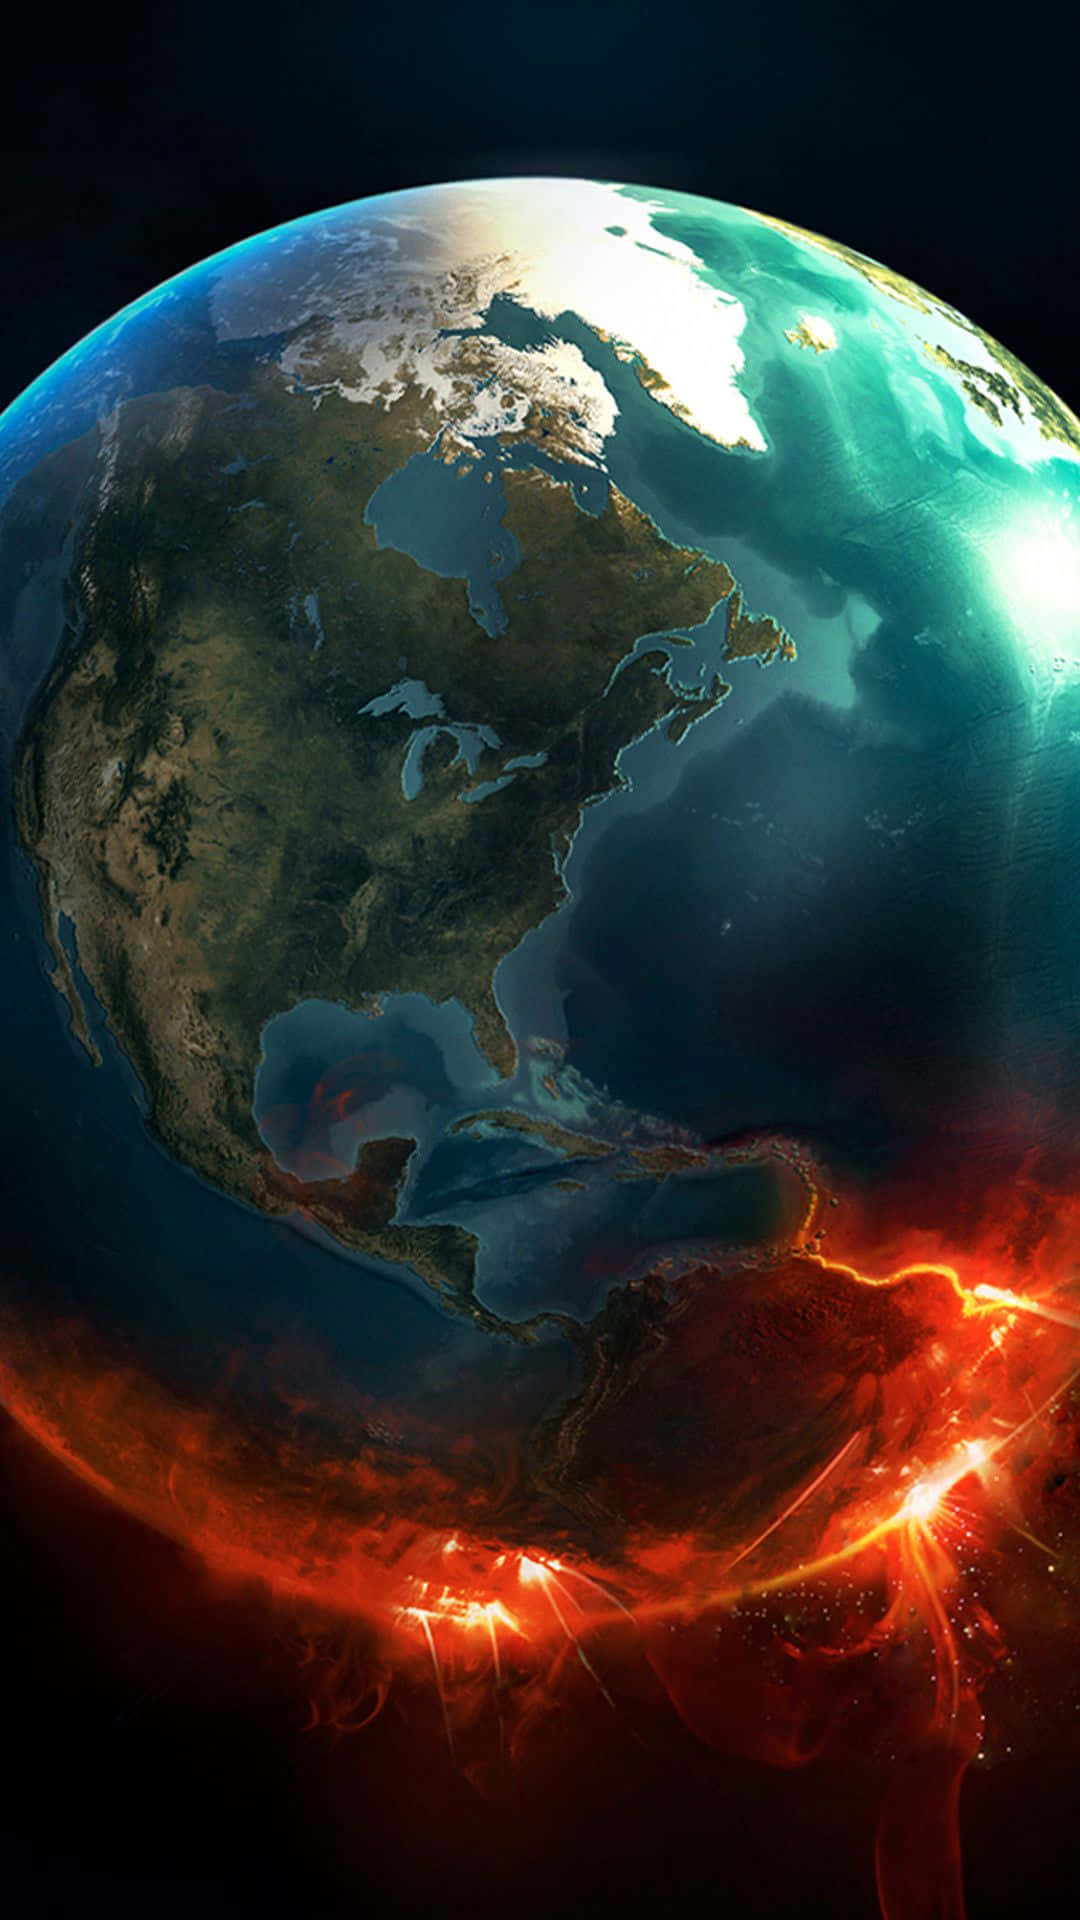 Galaxy S5 Burning Planet Earth Wallpaper